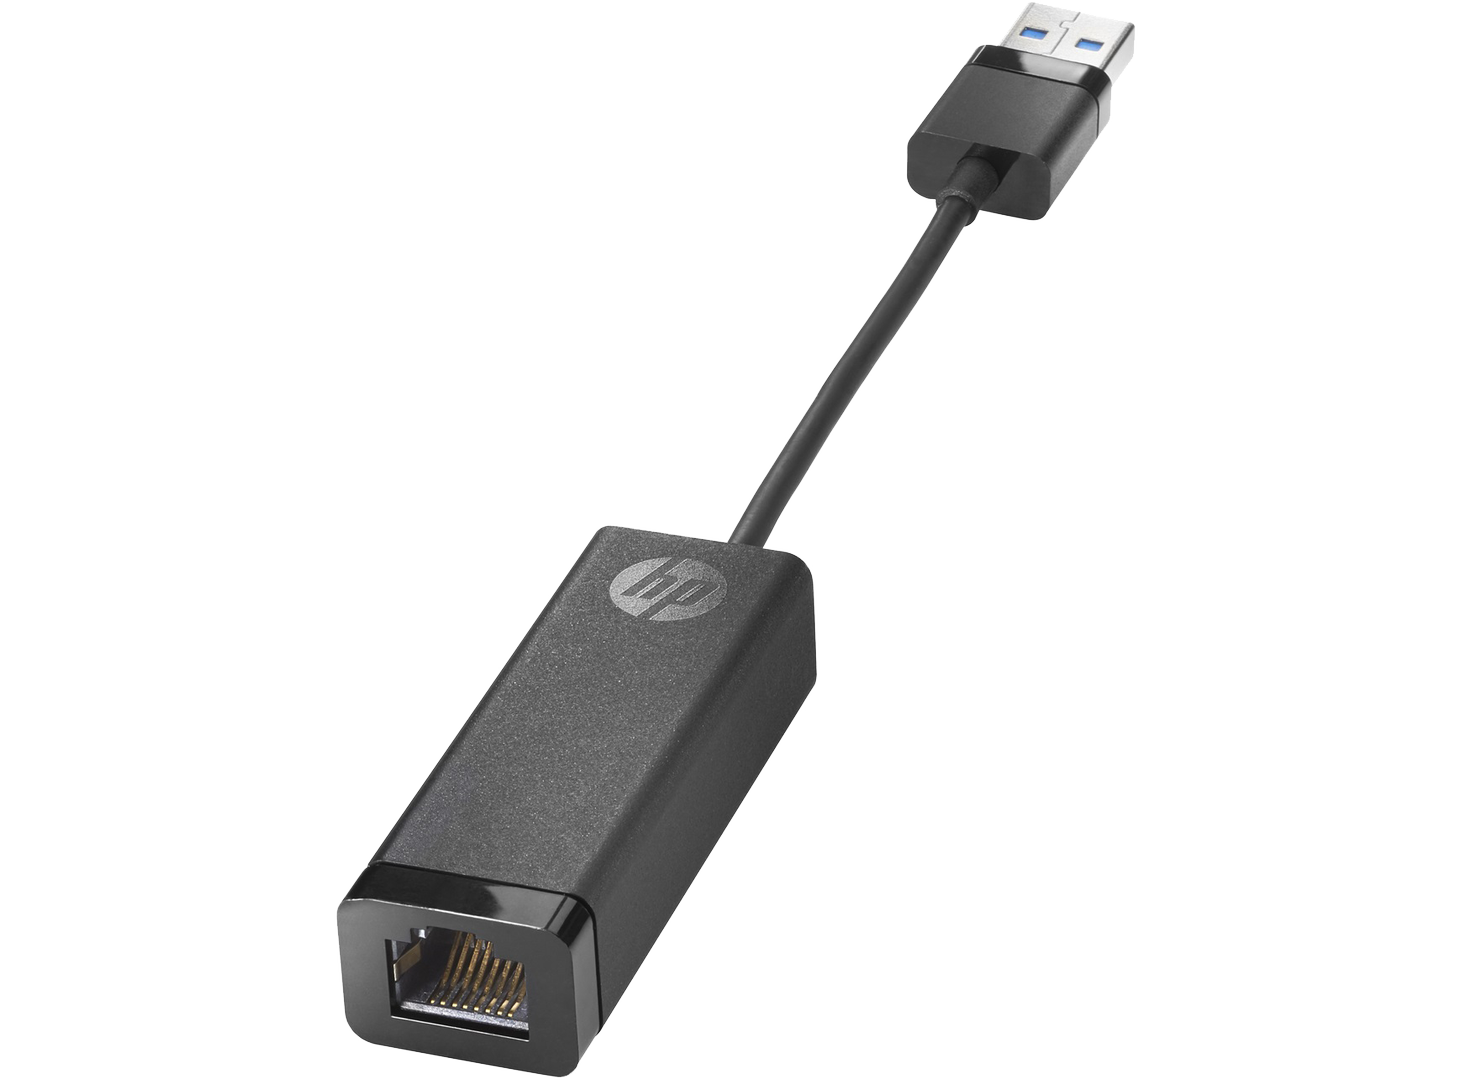 Hewlett packard usb. Купить фирменный адаптер НР USB для ноутбука.